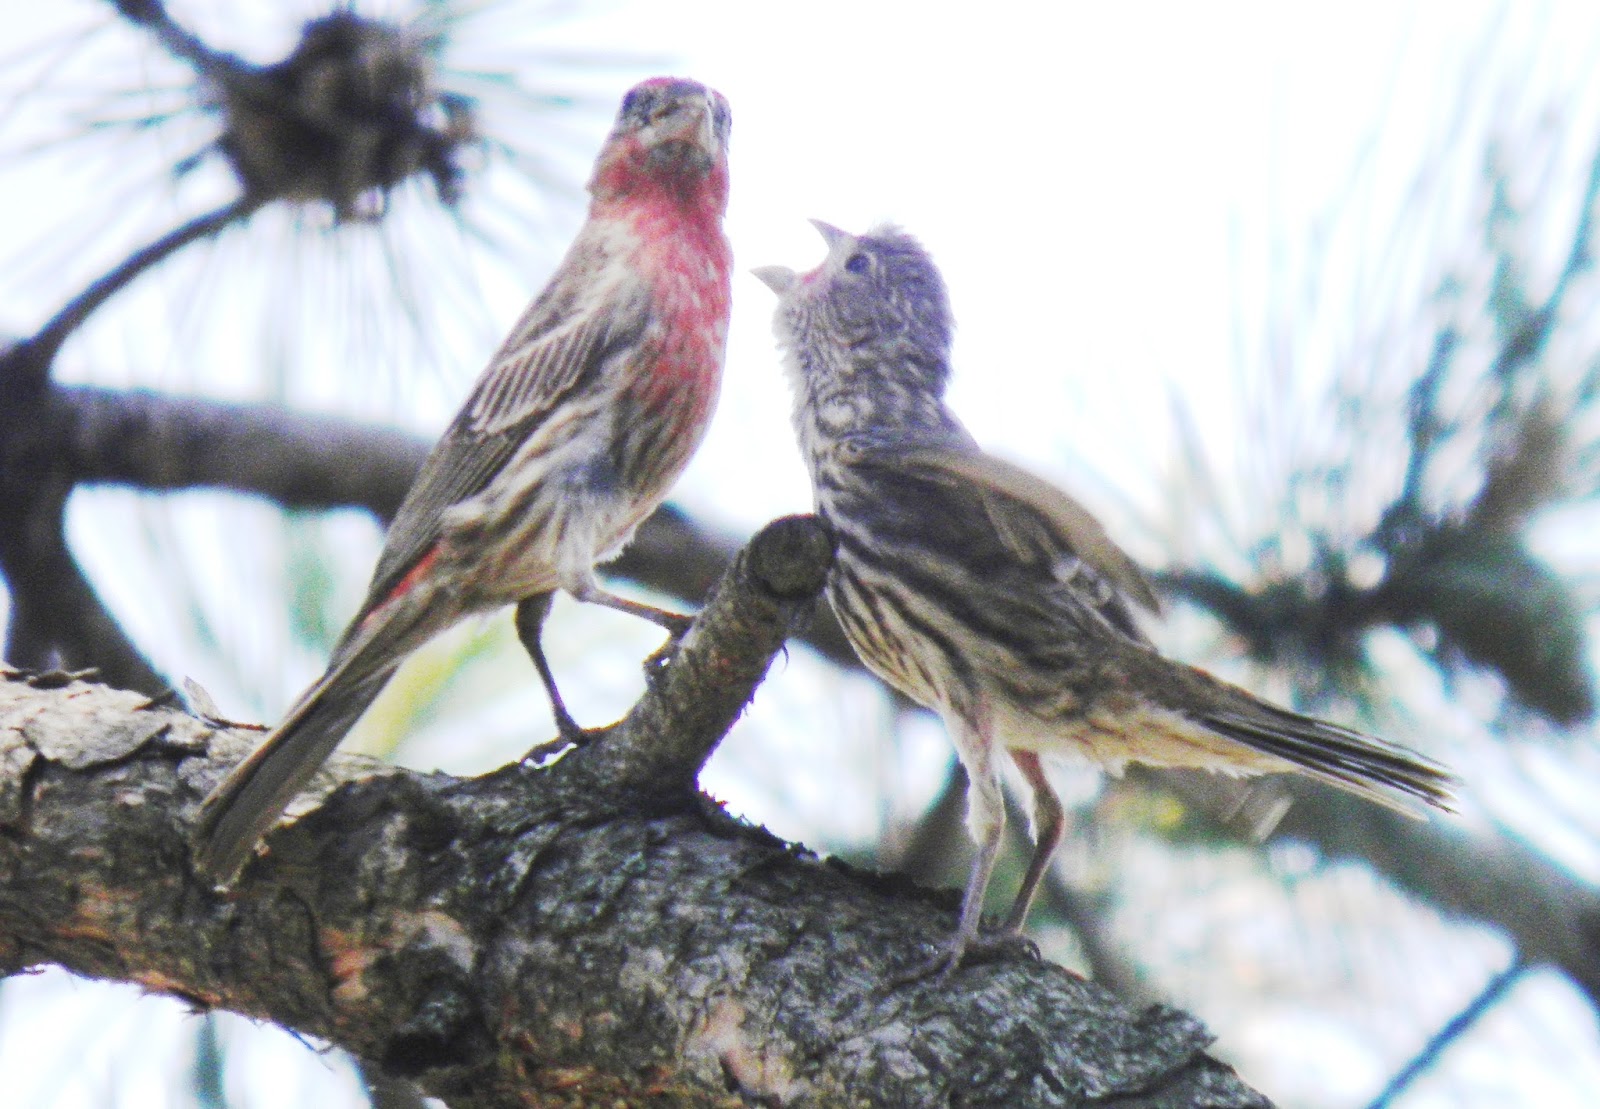 Wild Birds Unlimited: Effects of backyard bird feeding